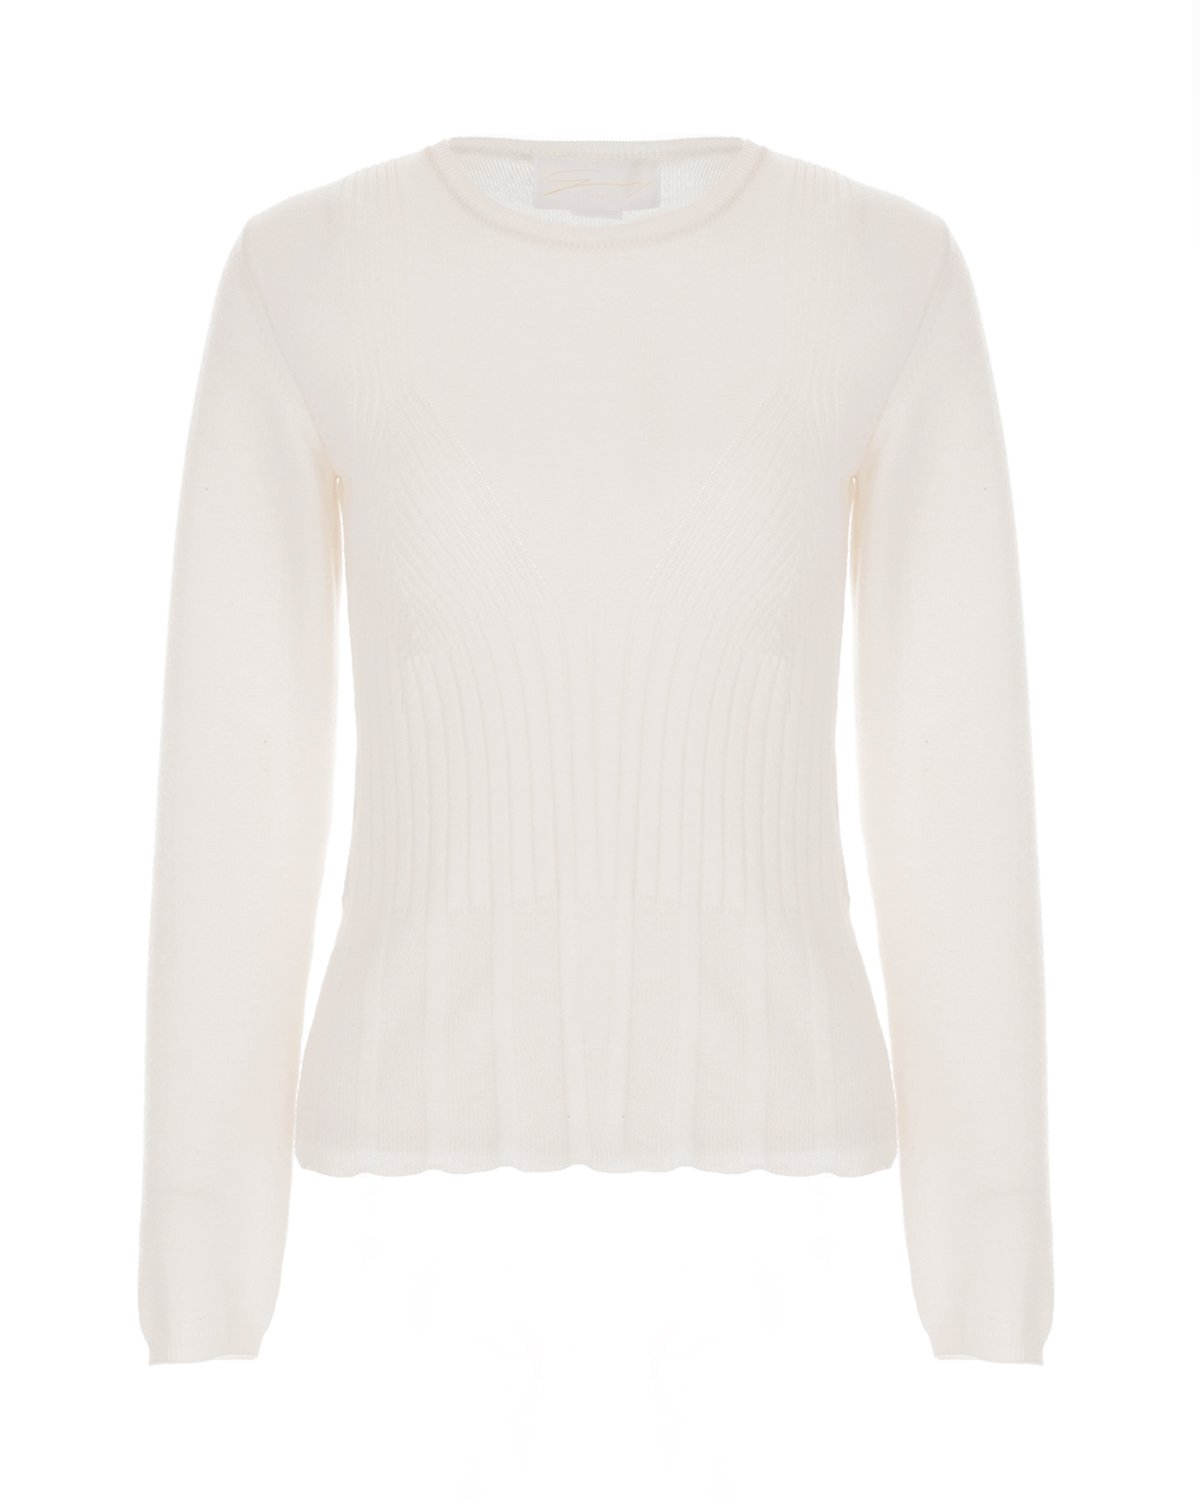 White turtleneck sweater | Sale, -50% | Genny